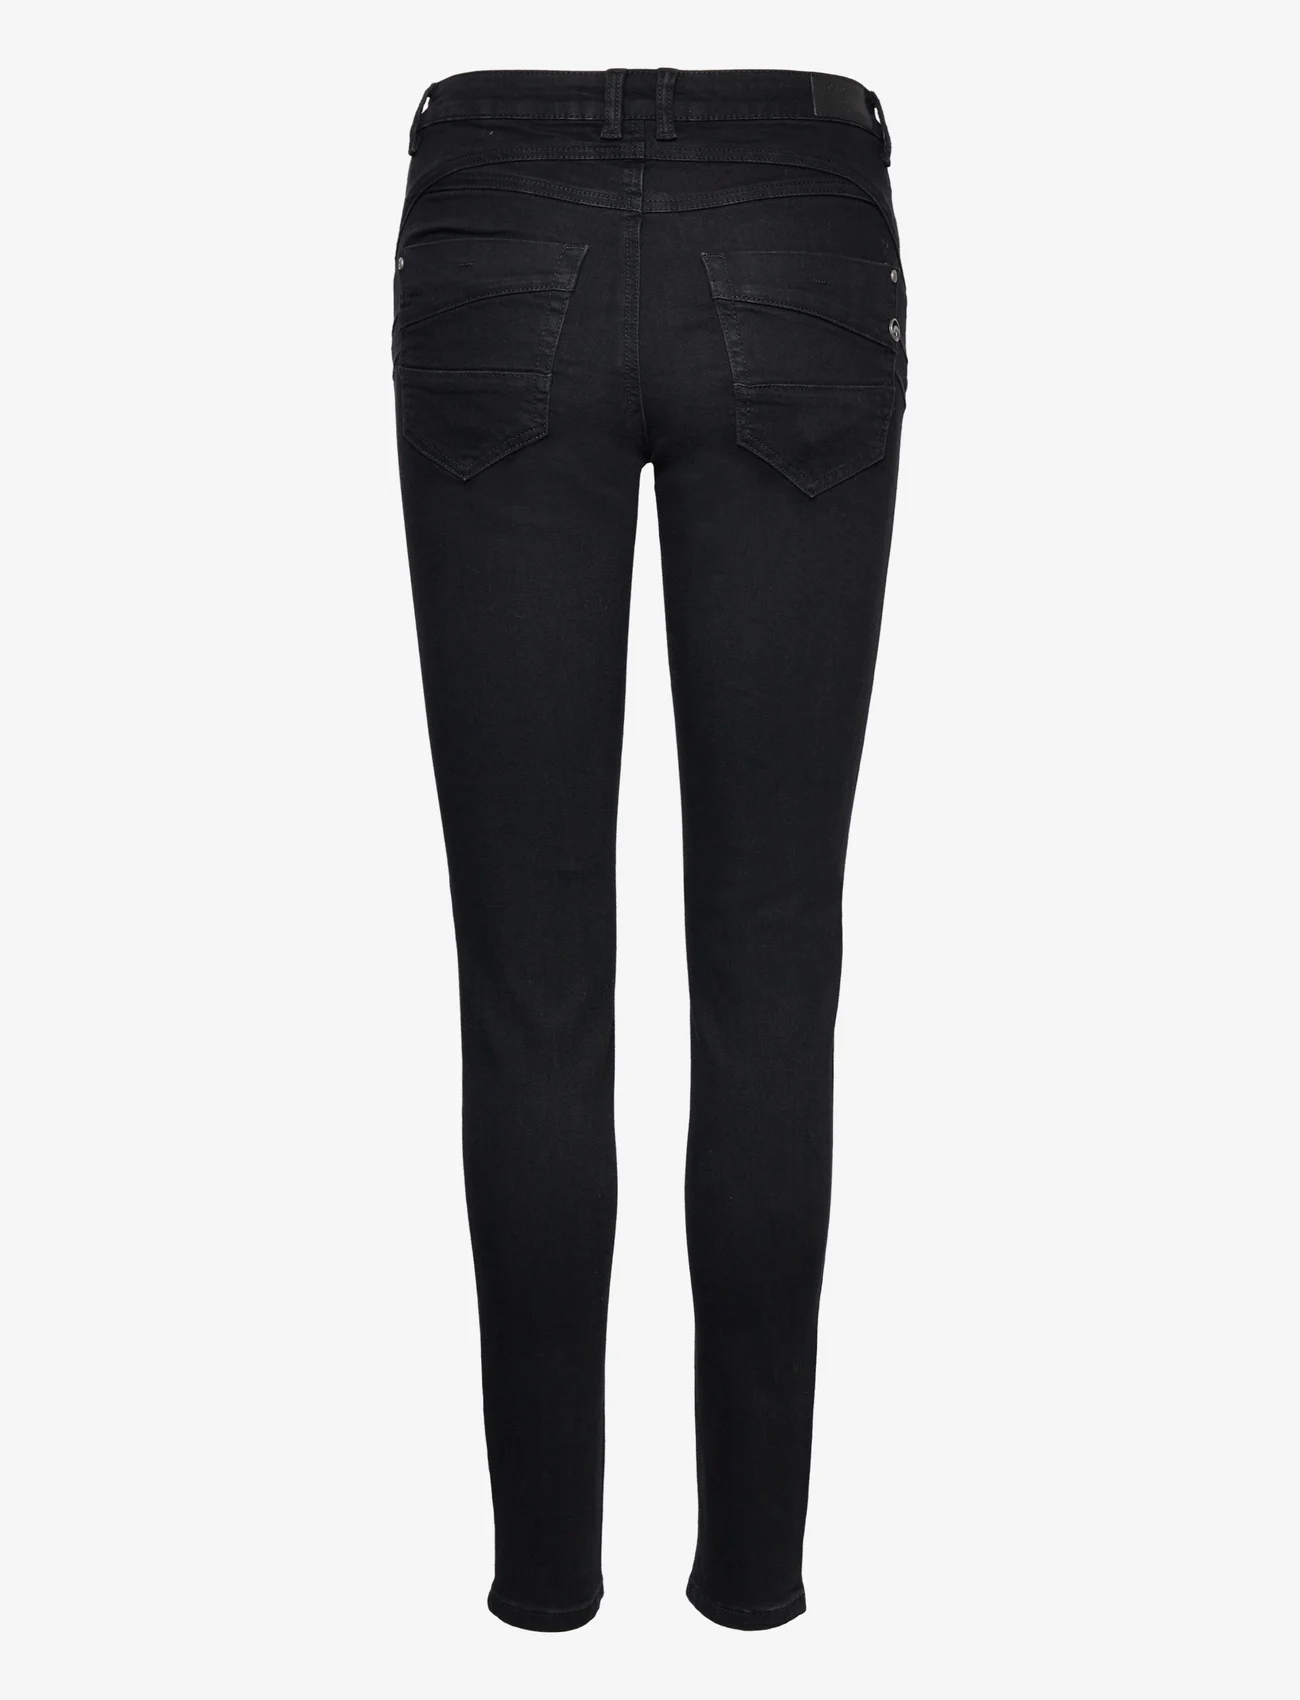 Cream - Amalie Jeans Shape fit - slim jeans - black fade - 1